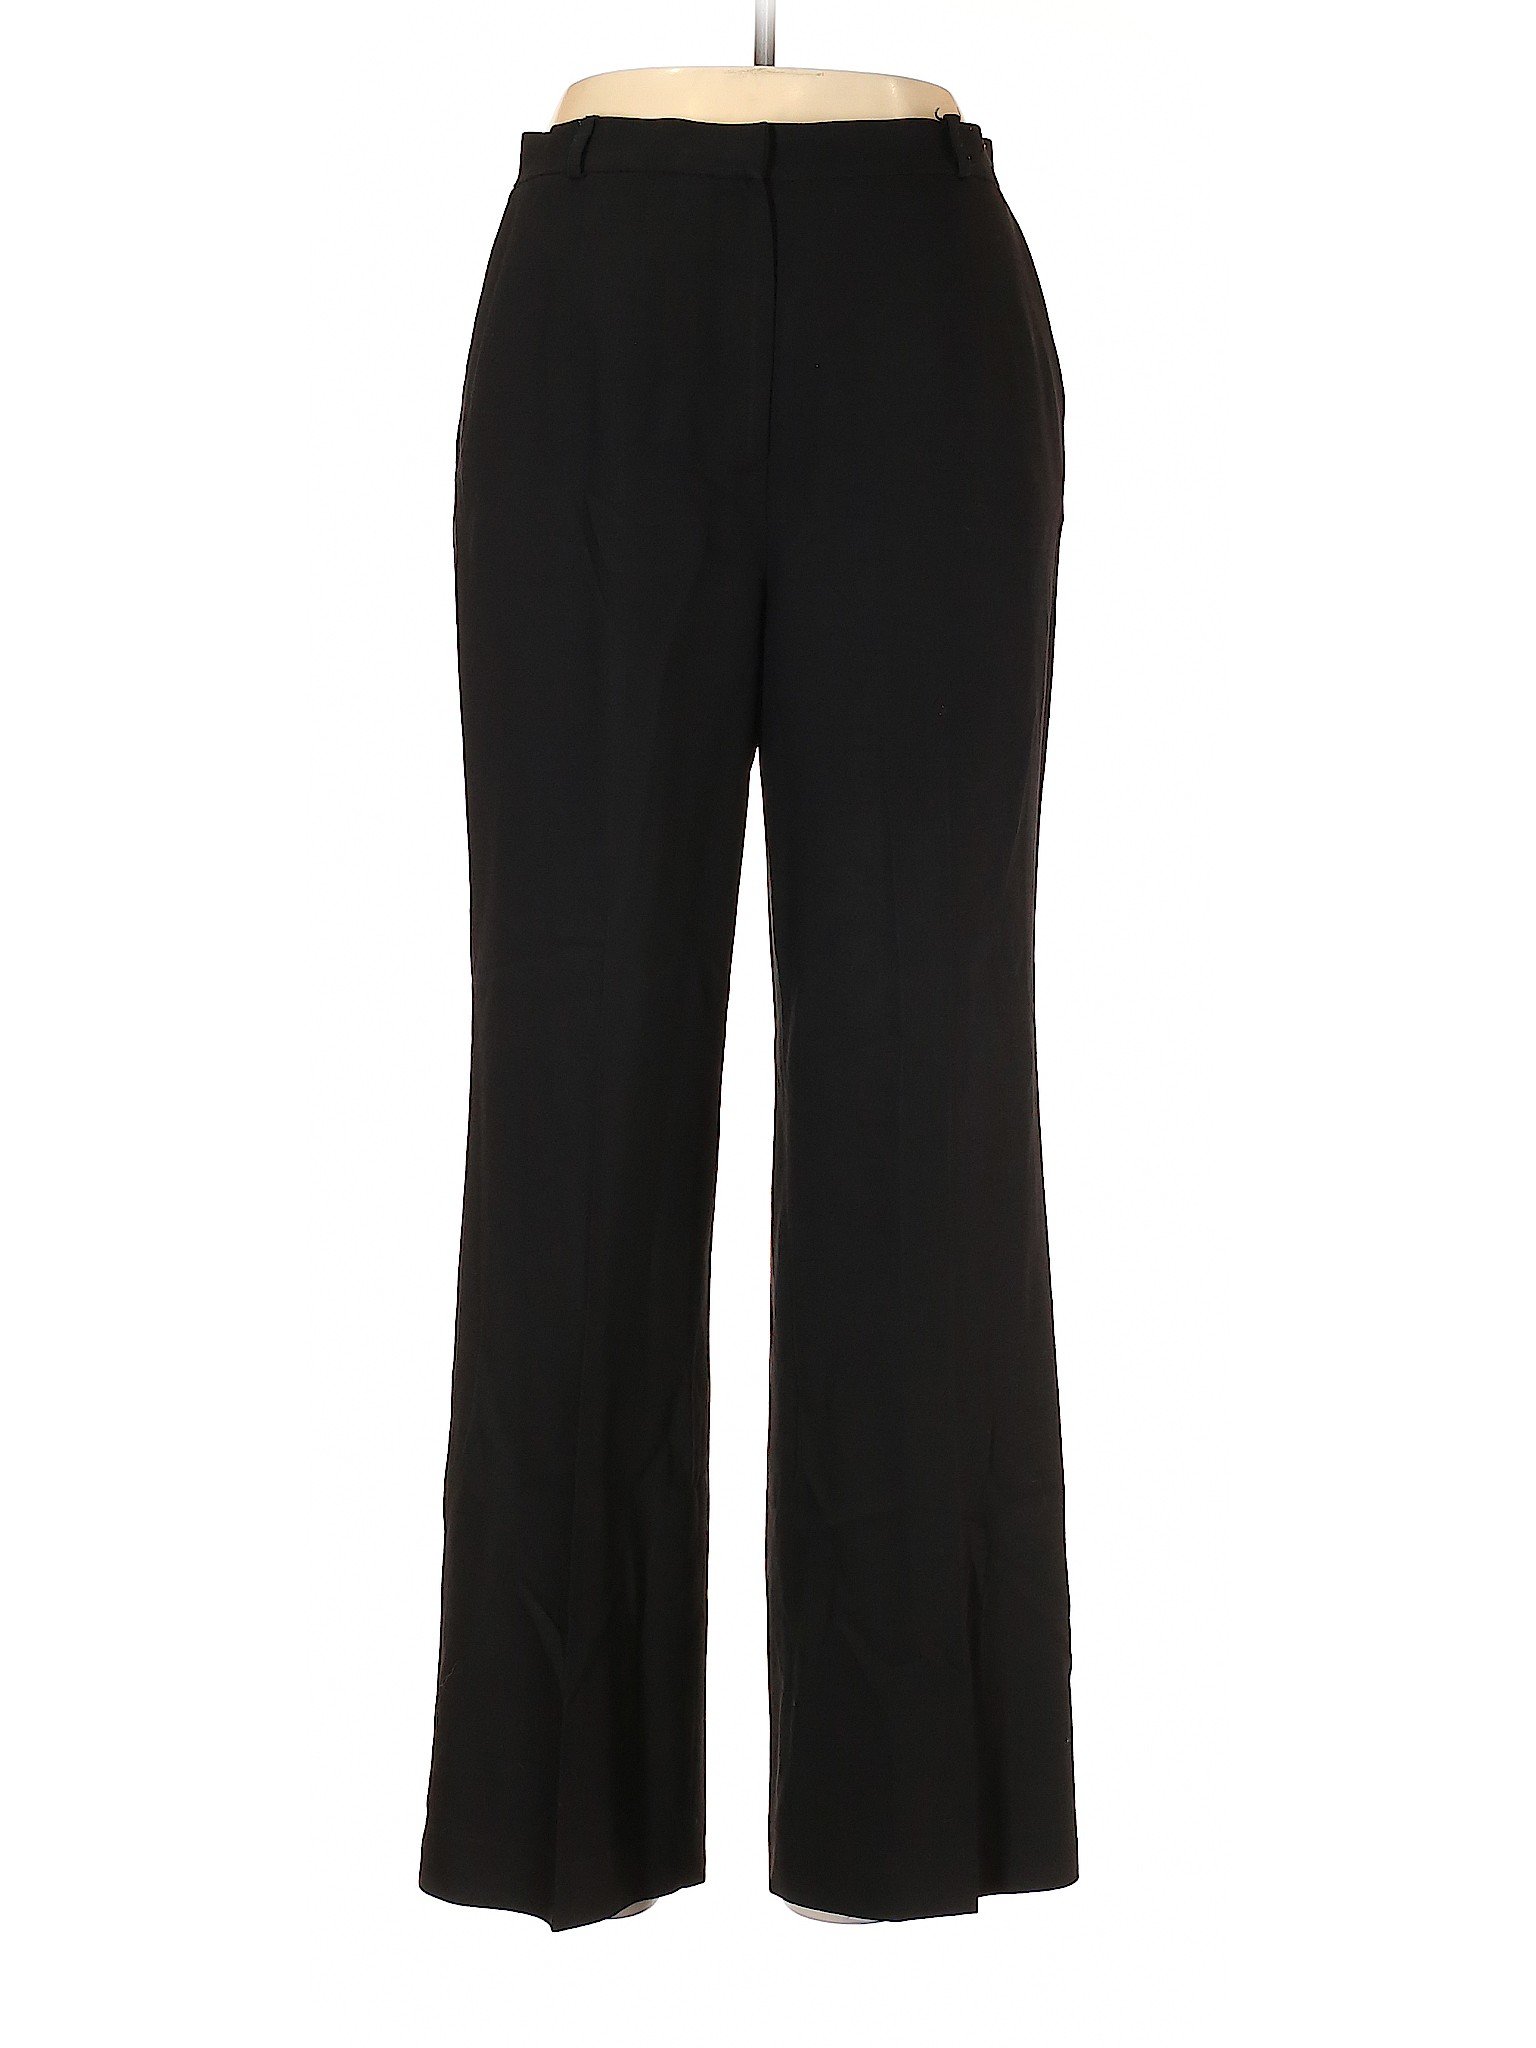 Talbots Women Black Dress Pants 10 Petites | eBay